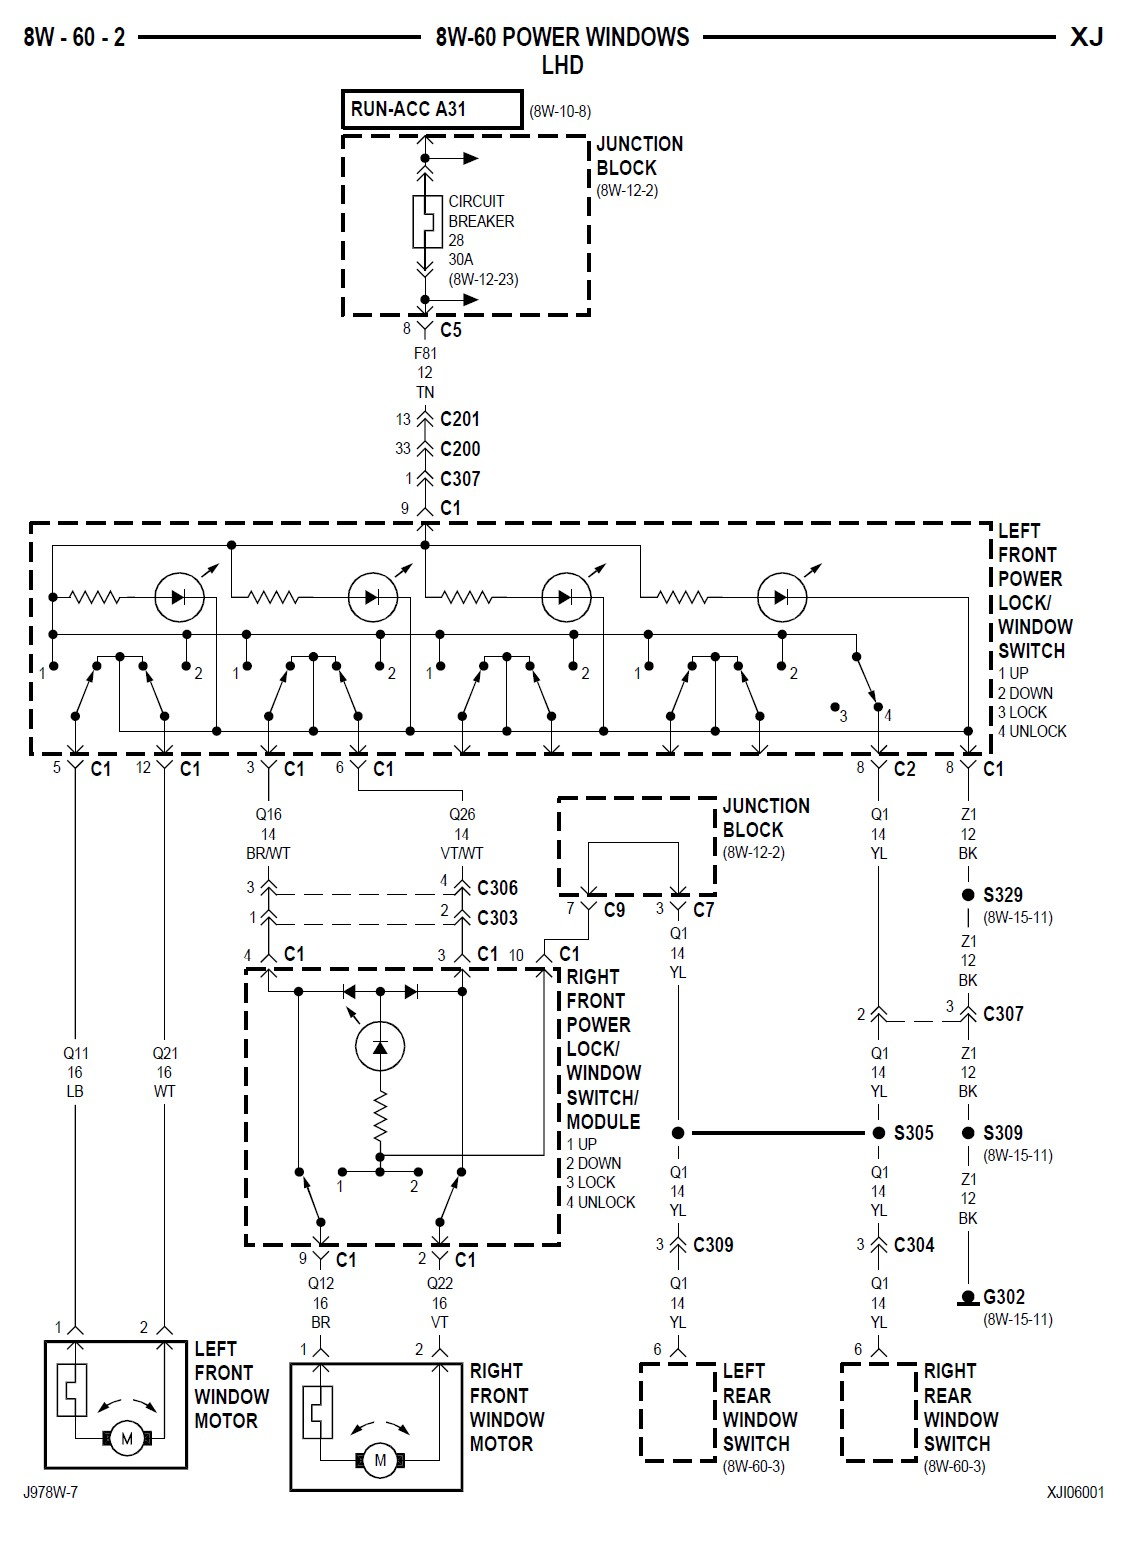 1996 Jeep Grand Cherokee Power Window Wiring Diagram Wiring Diagrams Database